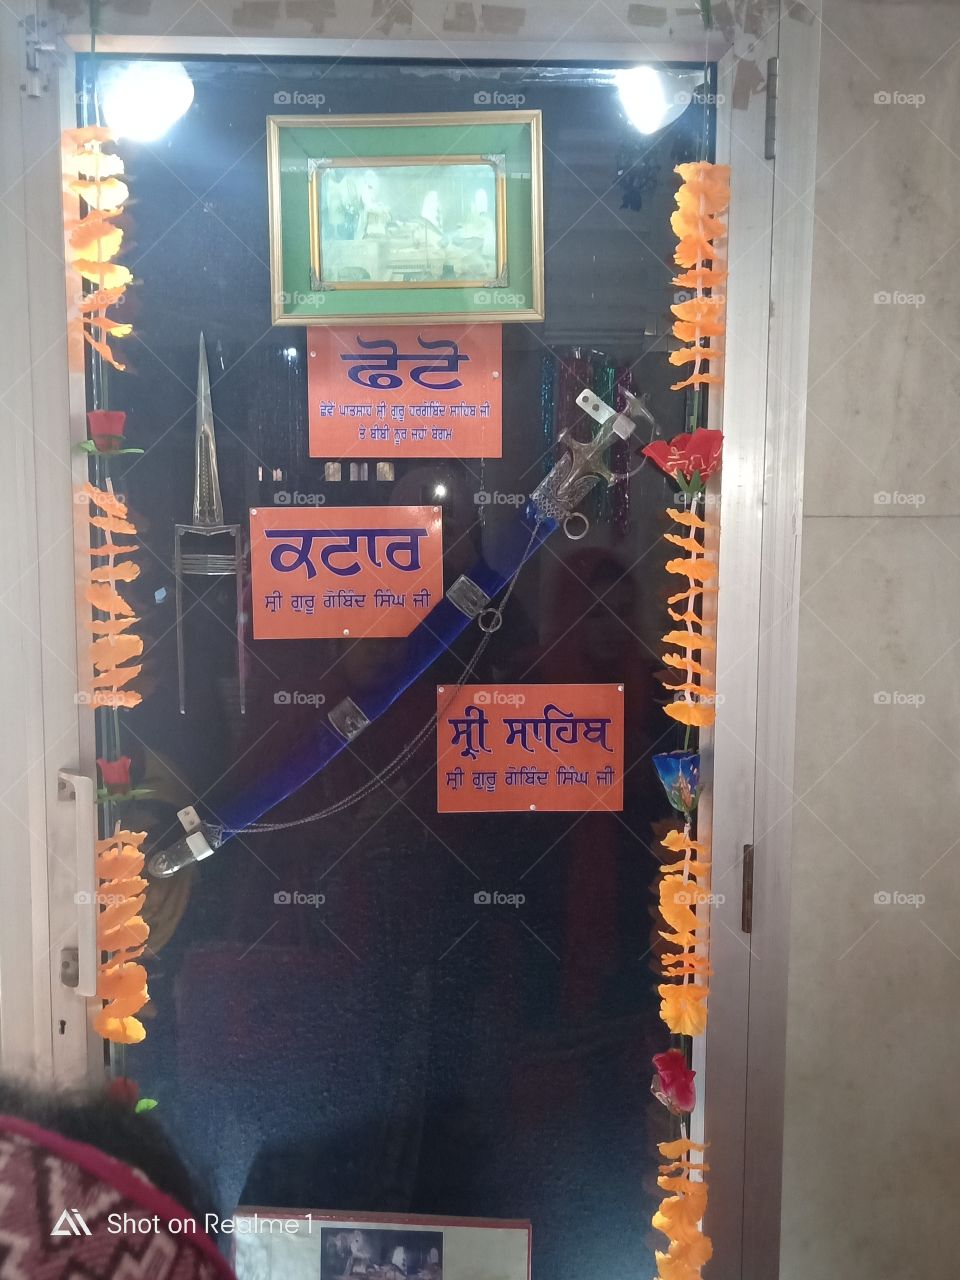 Historical Sword and Ktaar related to Tenth Sikh Guru Shri Guru Gobind Singh Ji and that time this Sword and Ktaar in Gurudwara Sahib Shri Bhatha Sahib Ji.